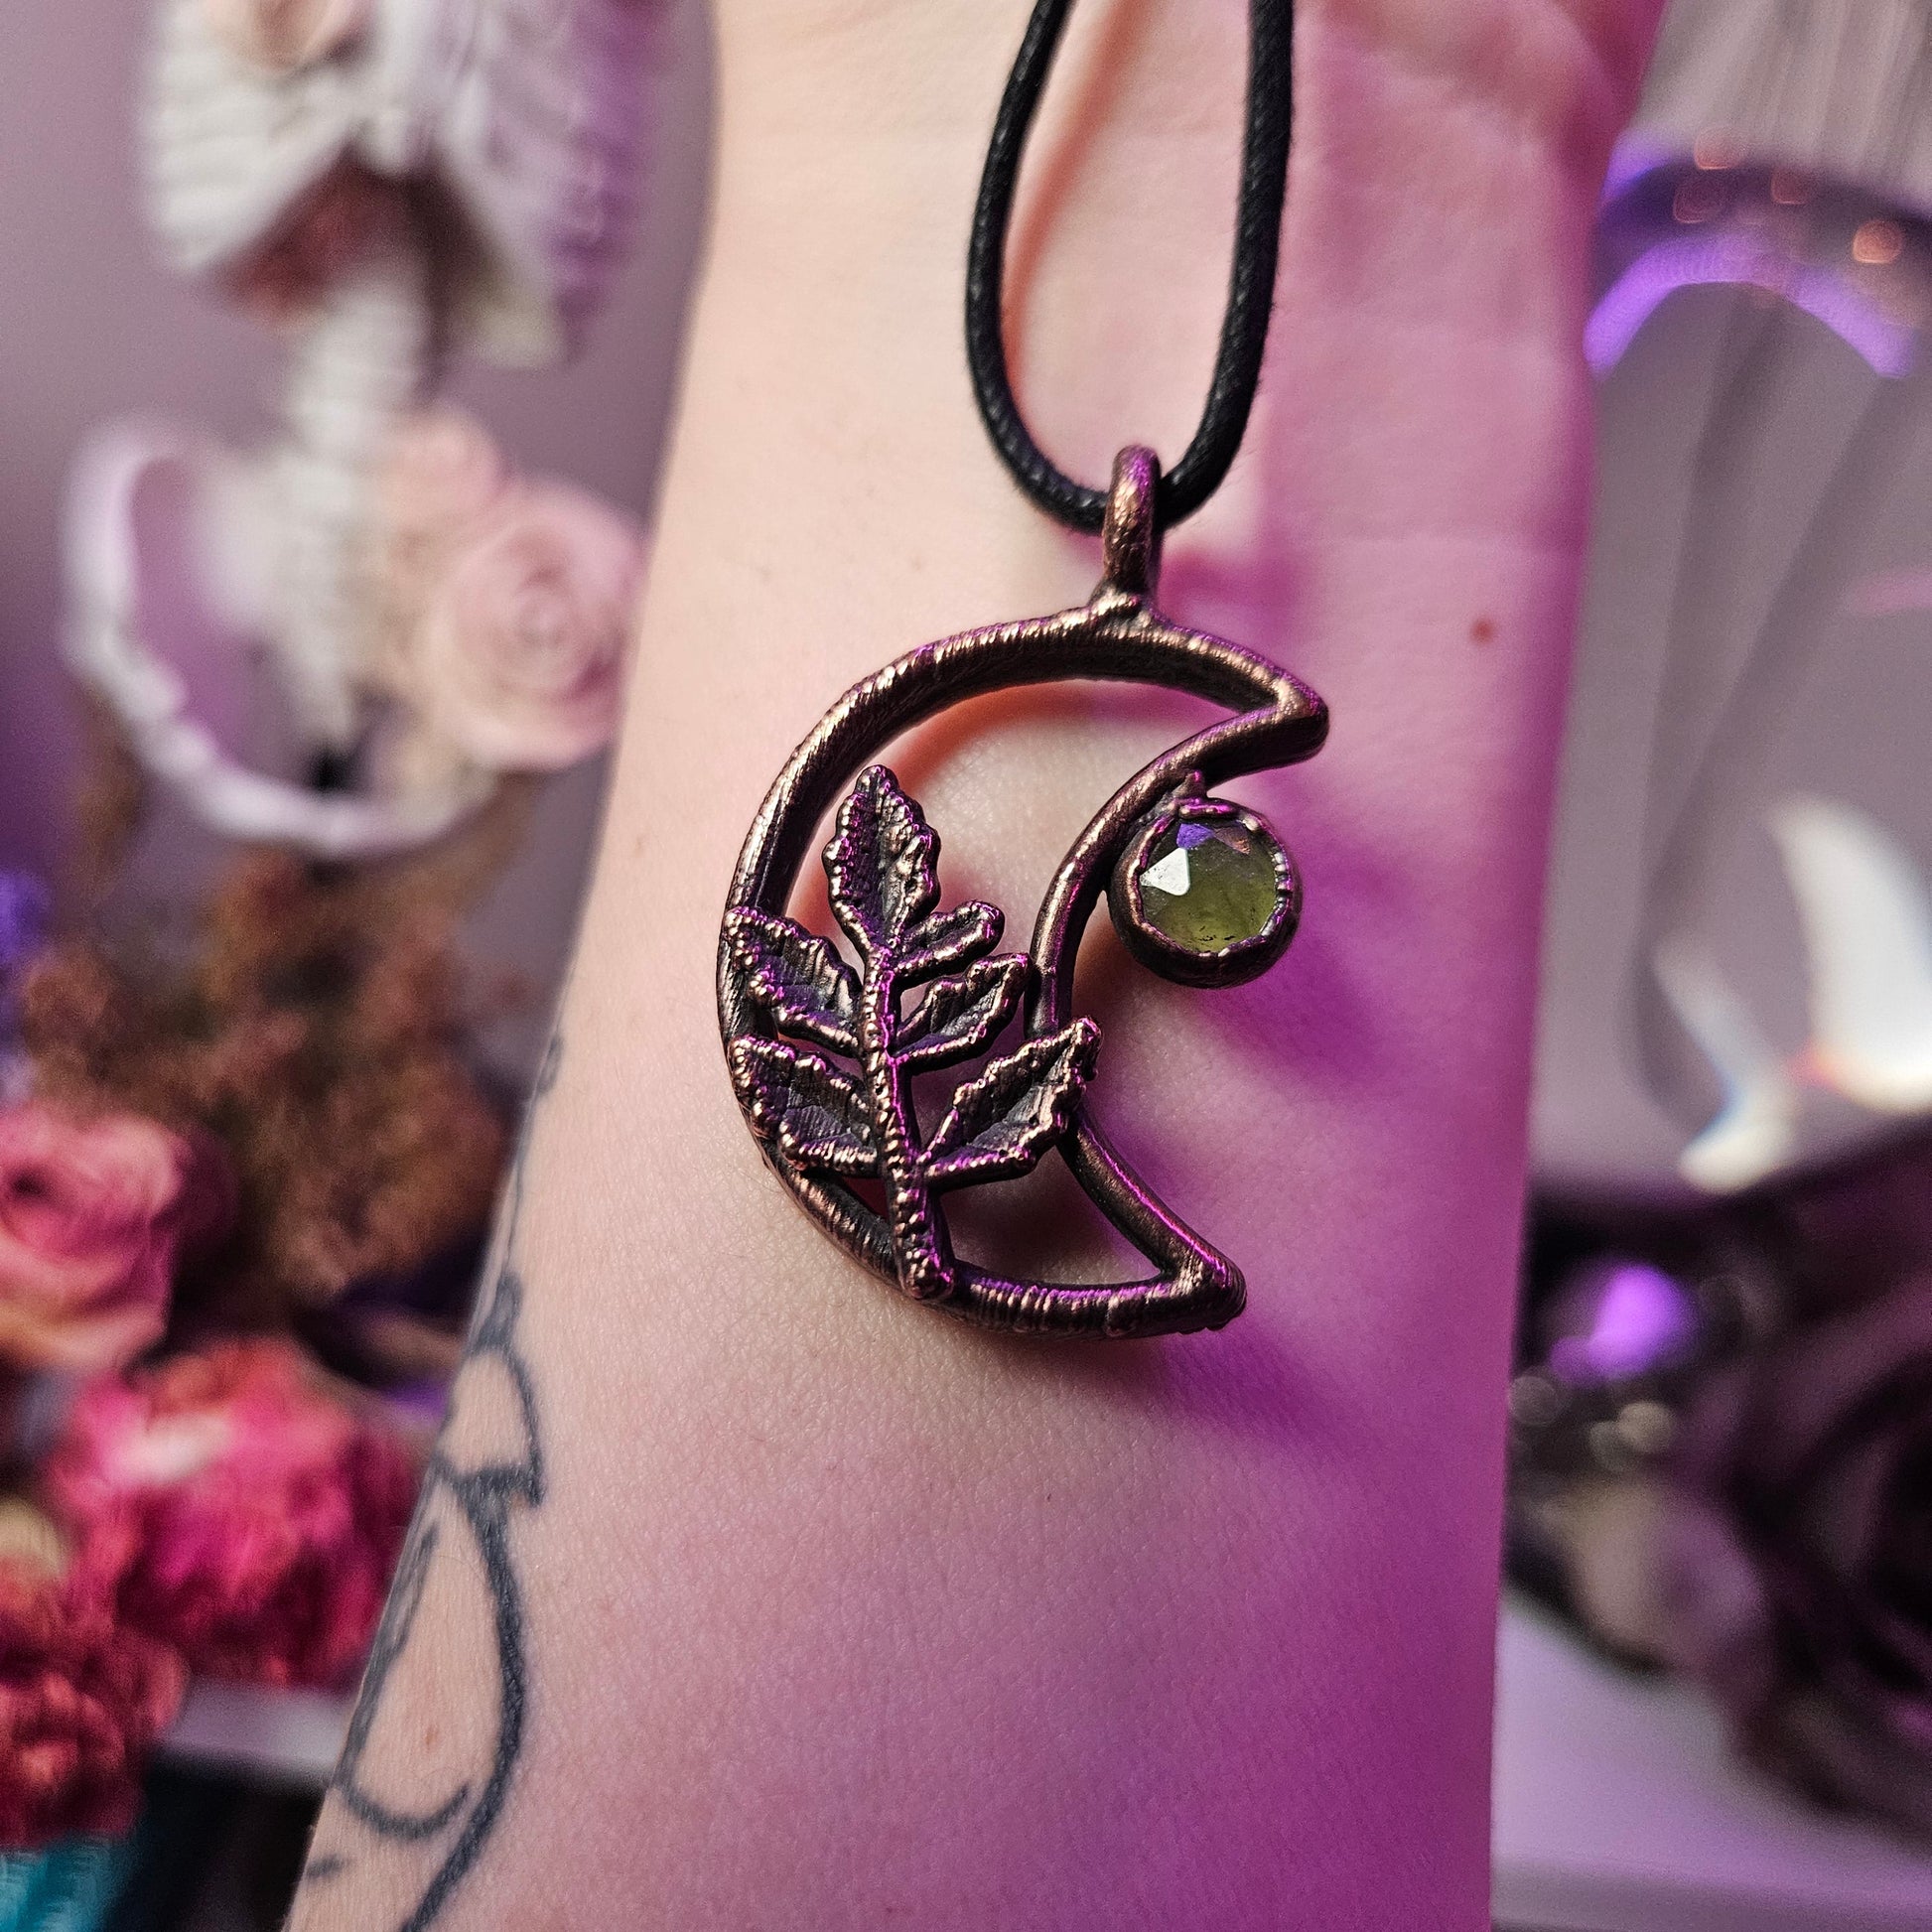 a woman’s arm with a purple bracelet and a purple flower